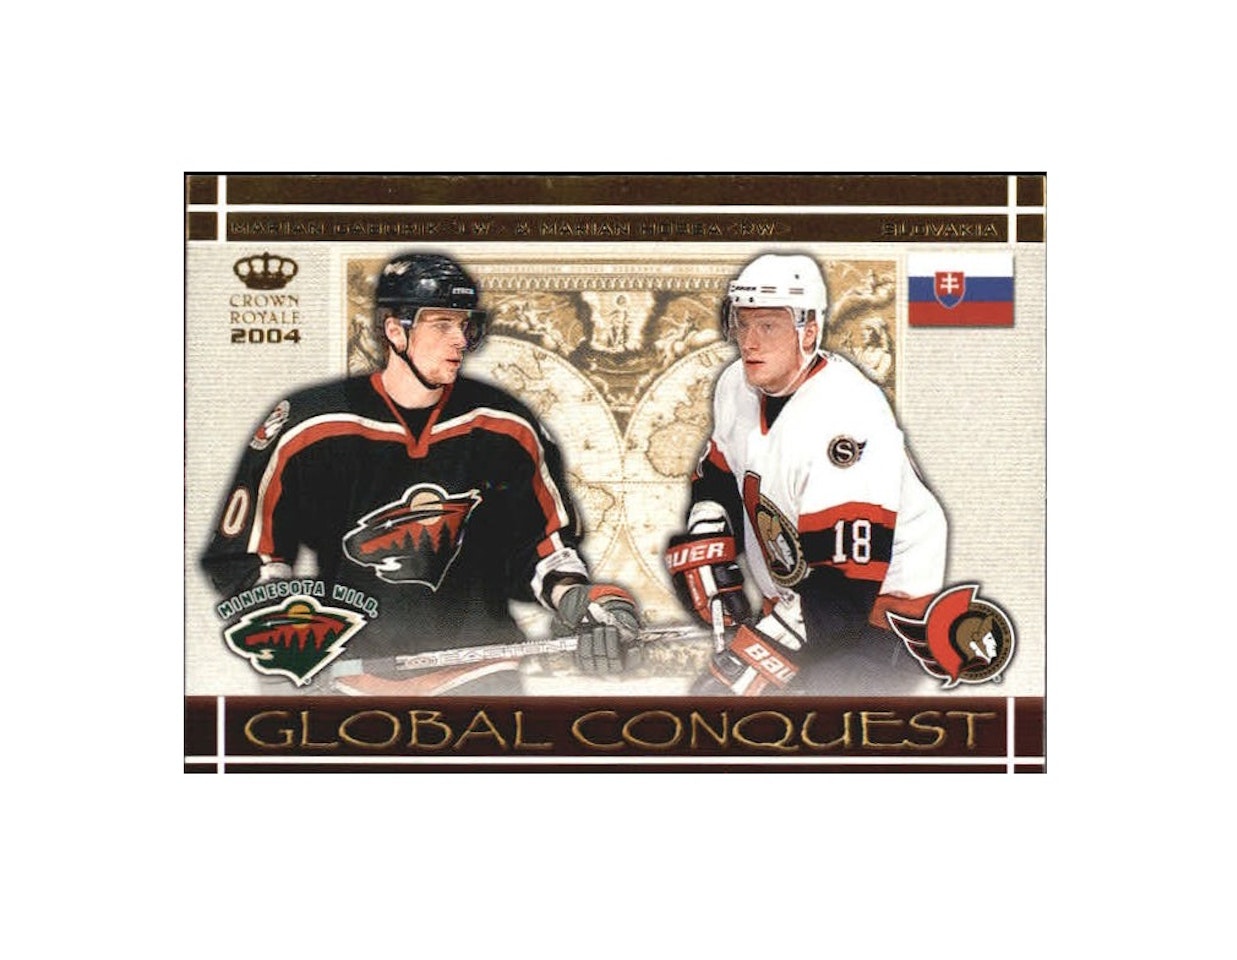 2003-04 Crown Royale Global Conquest #7 Marian Gaborik Marian Hossa (12-X162-NHLWILD+SENATORS)